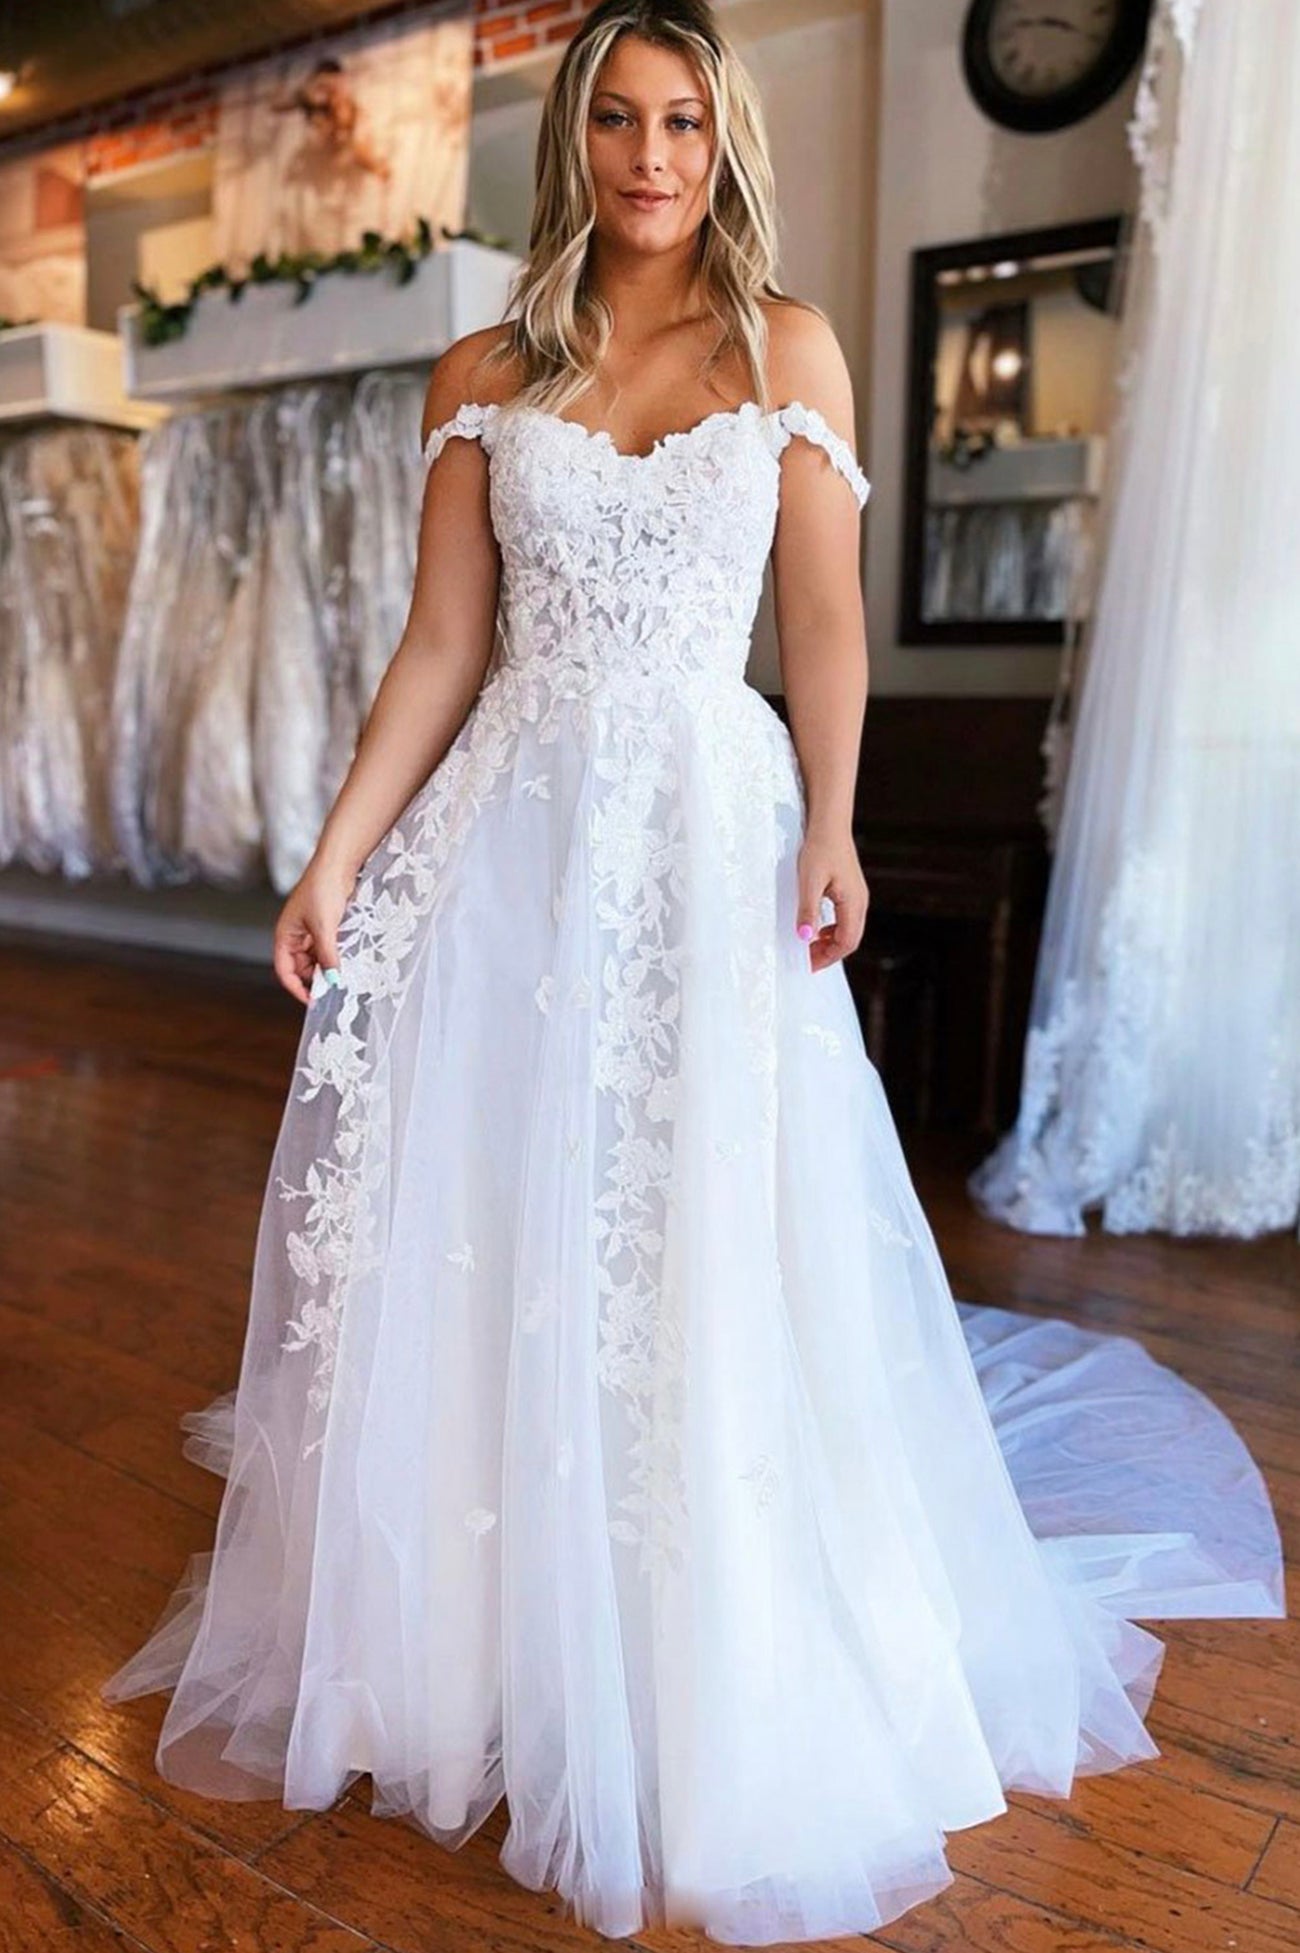 shopluu Elegant White Lace Tulle Long Prom Dress, White Evening Dress US 8 / White